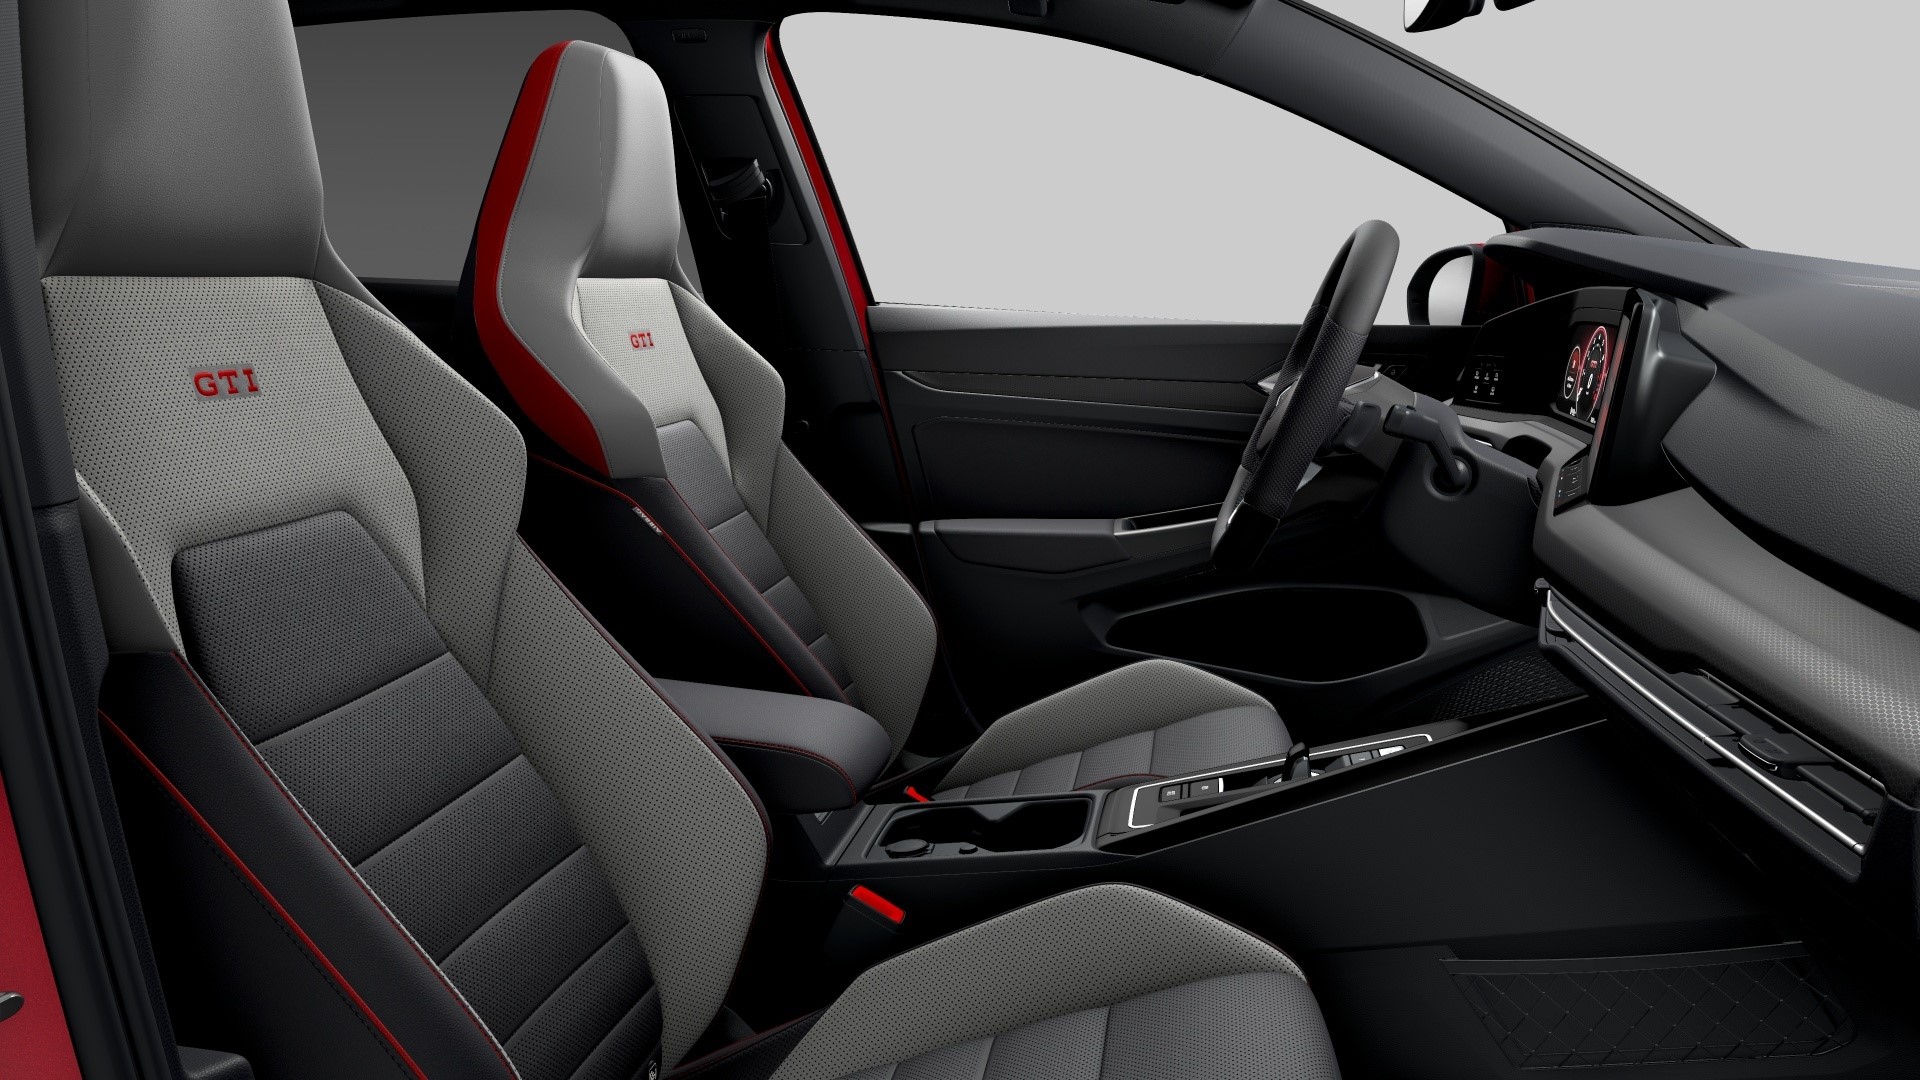 The New Golf GTI interior